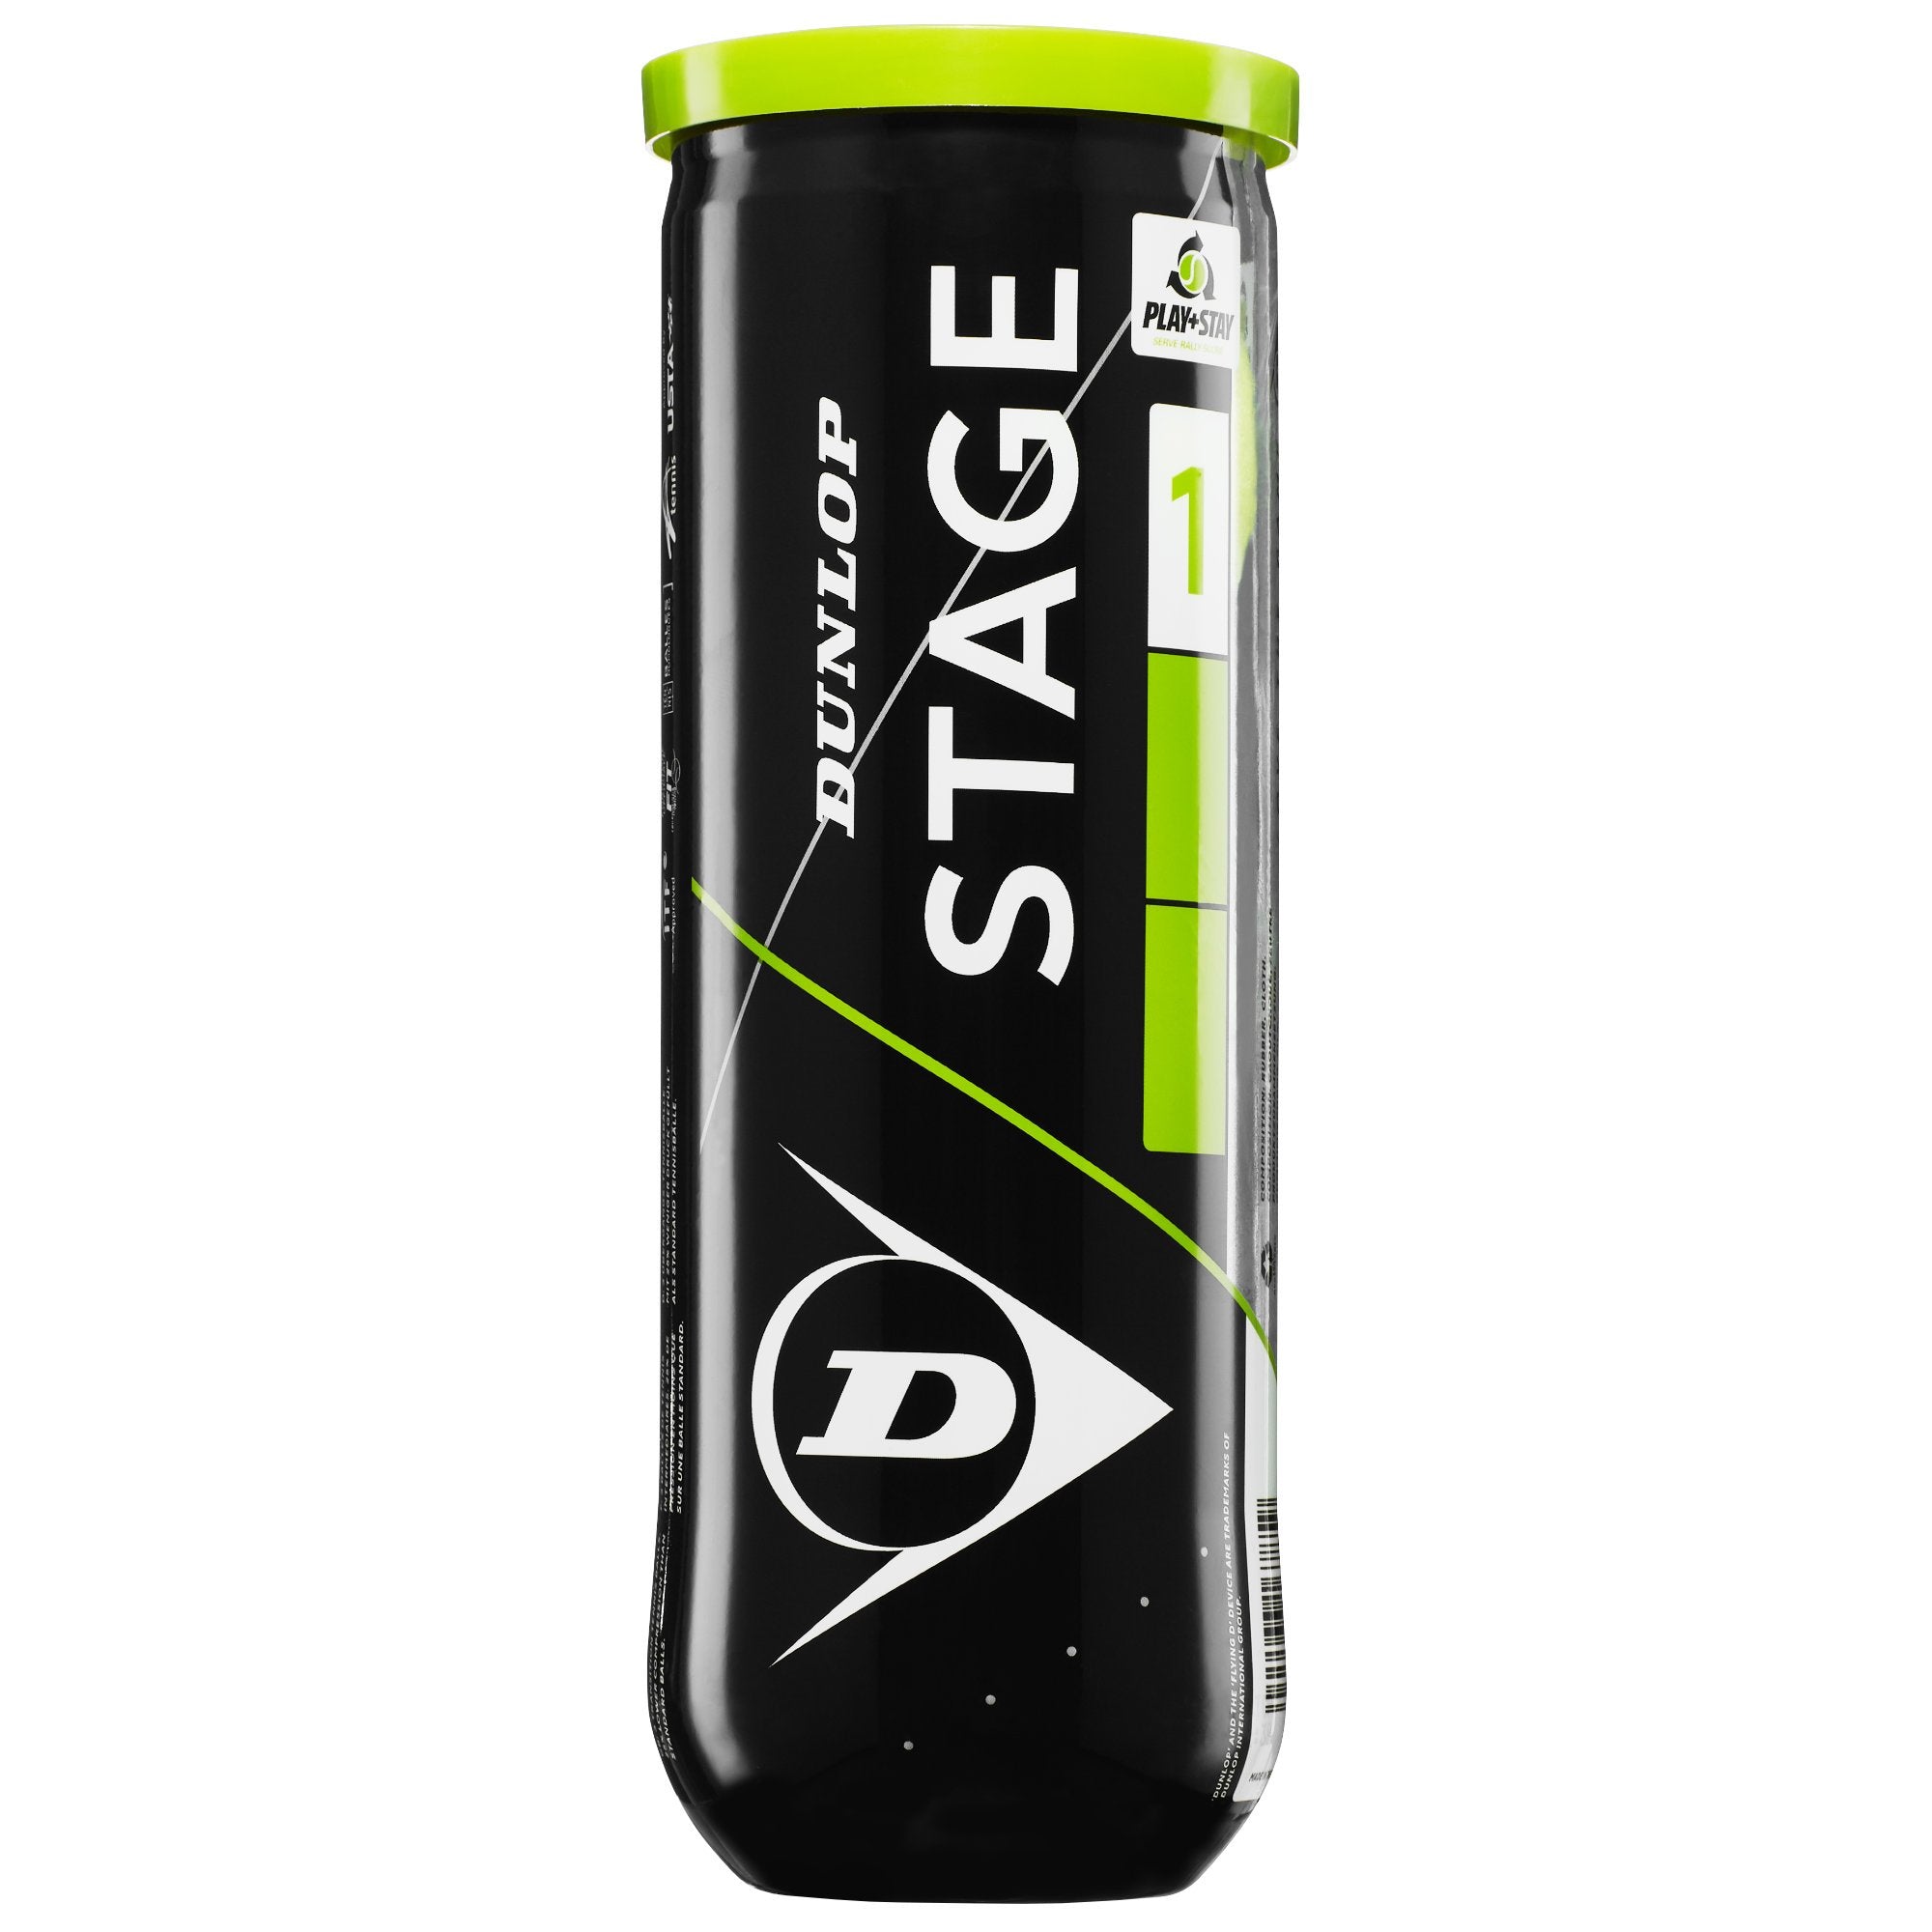 Dunlop Stage 1 Green Mini Tennis Balls - Tube of 3